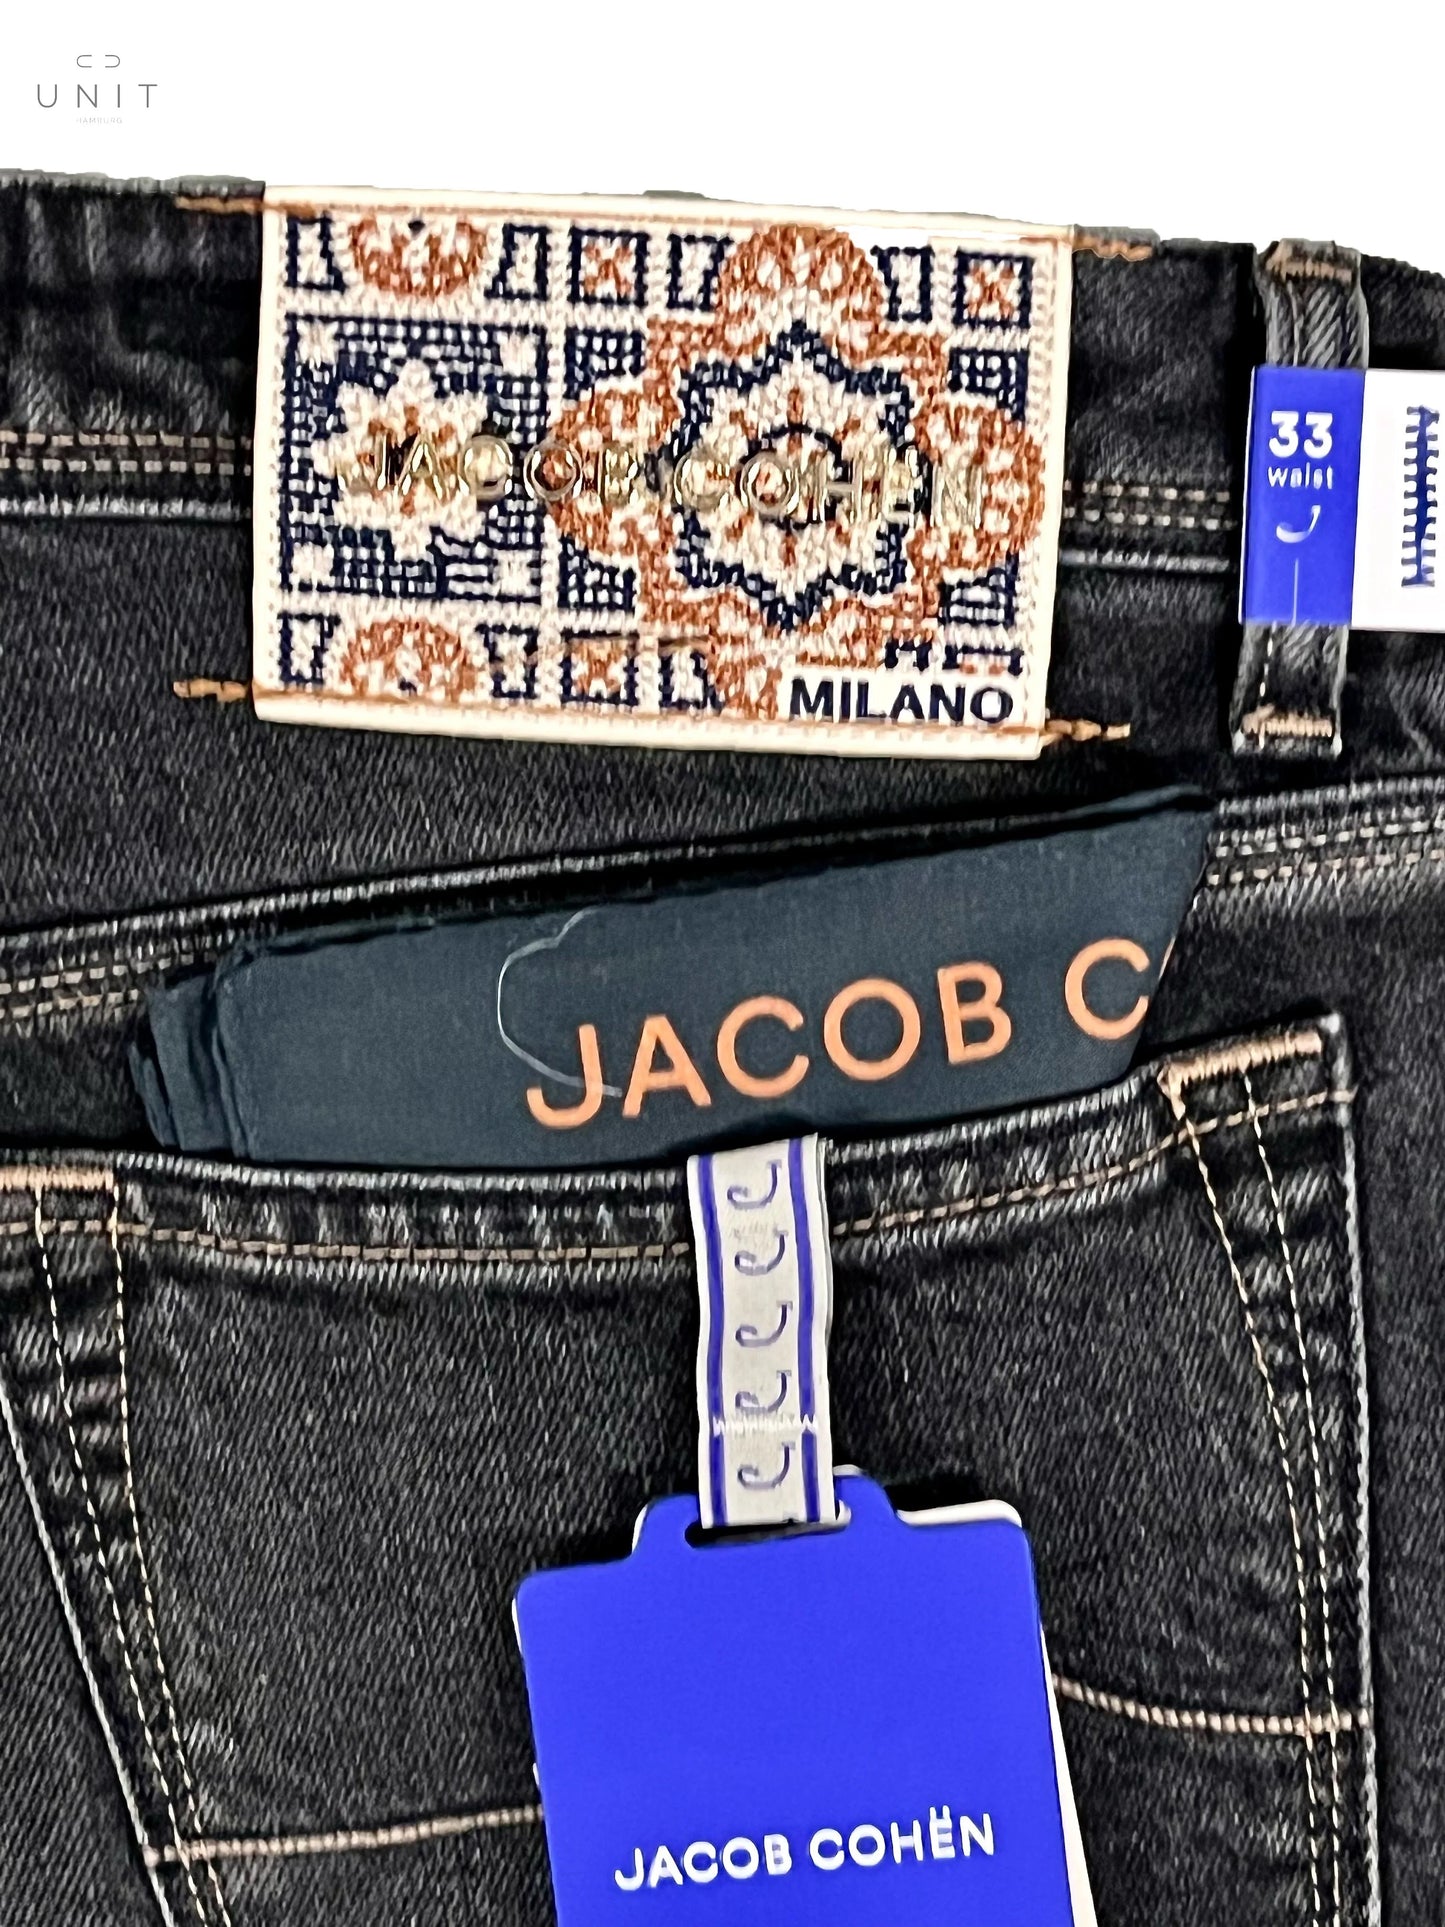 Jacob Cohen, Bard, Milano label, black washed Jacob Cohen